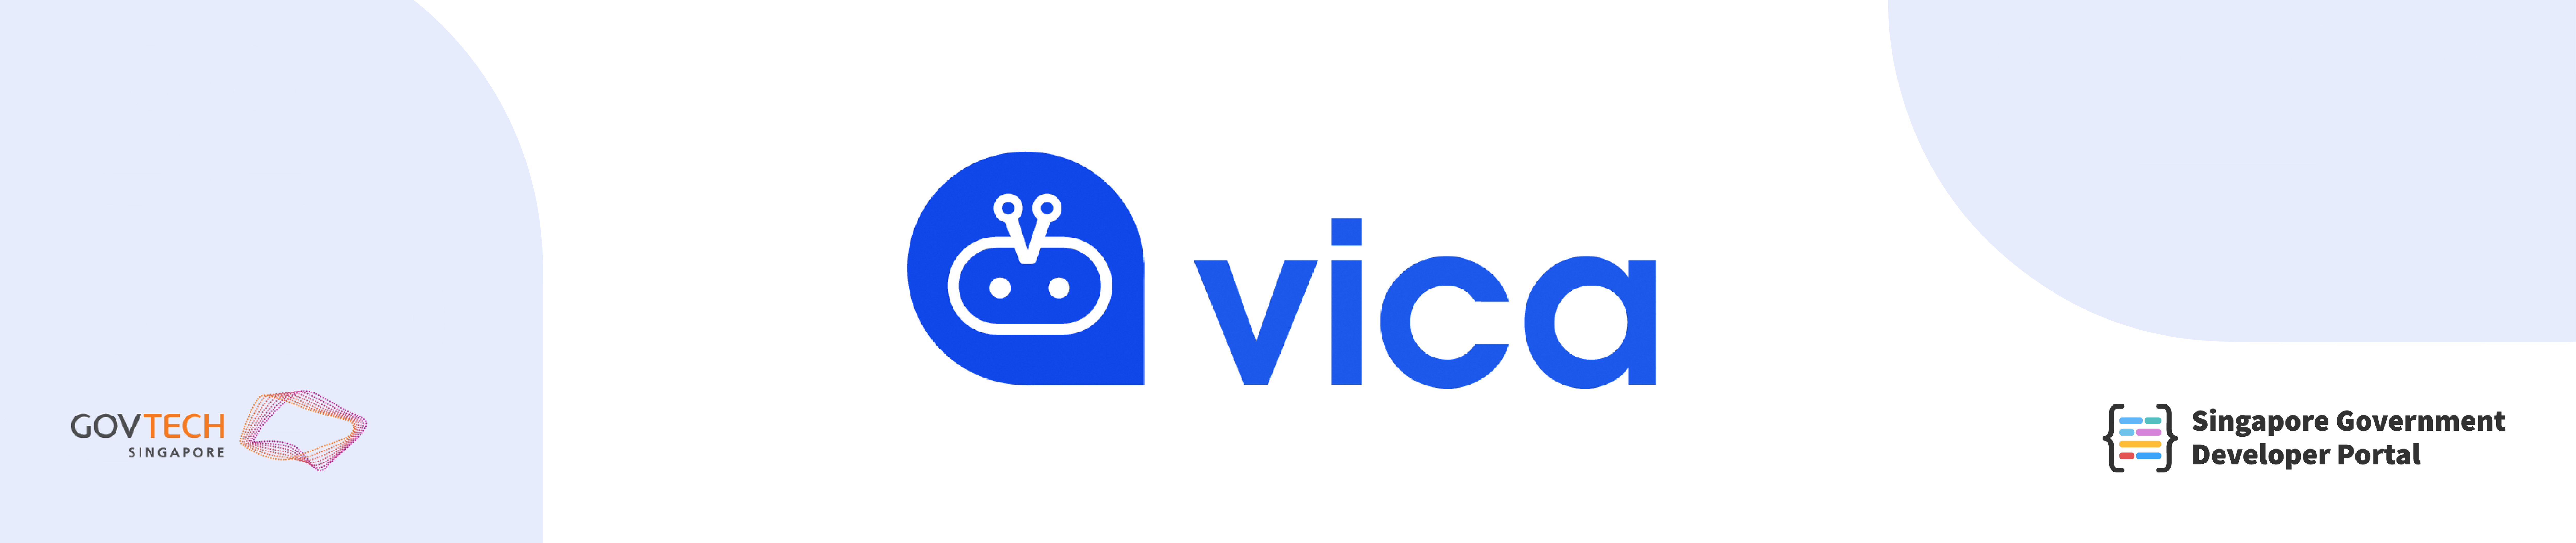 VICA header banner for Singapore Government Developer Portal